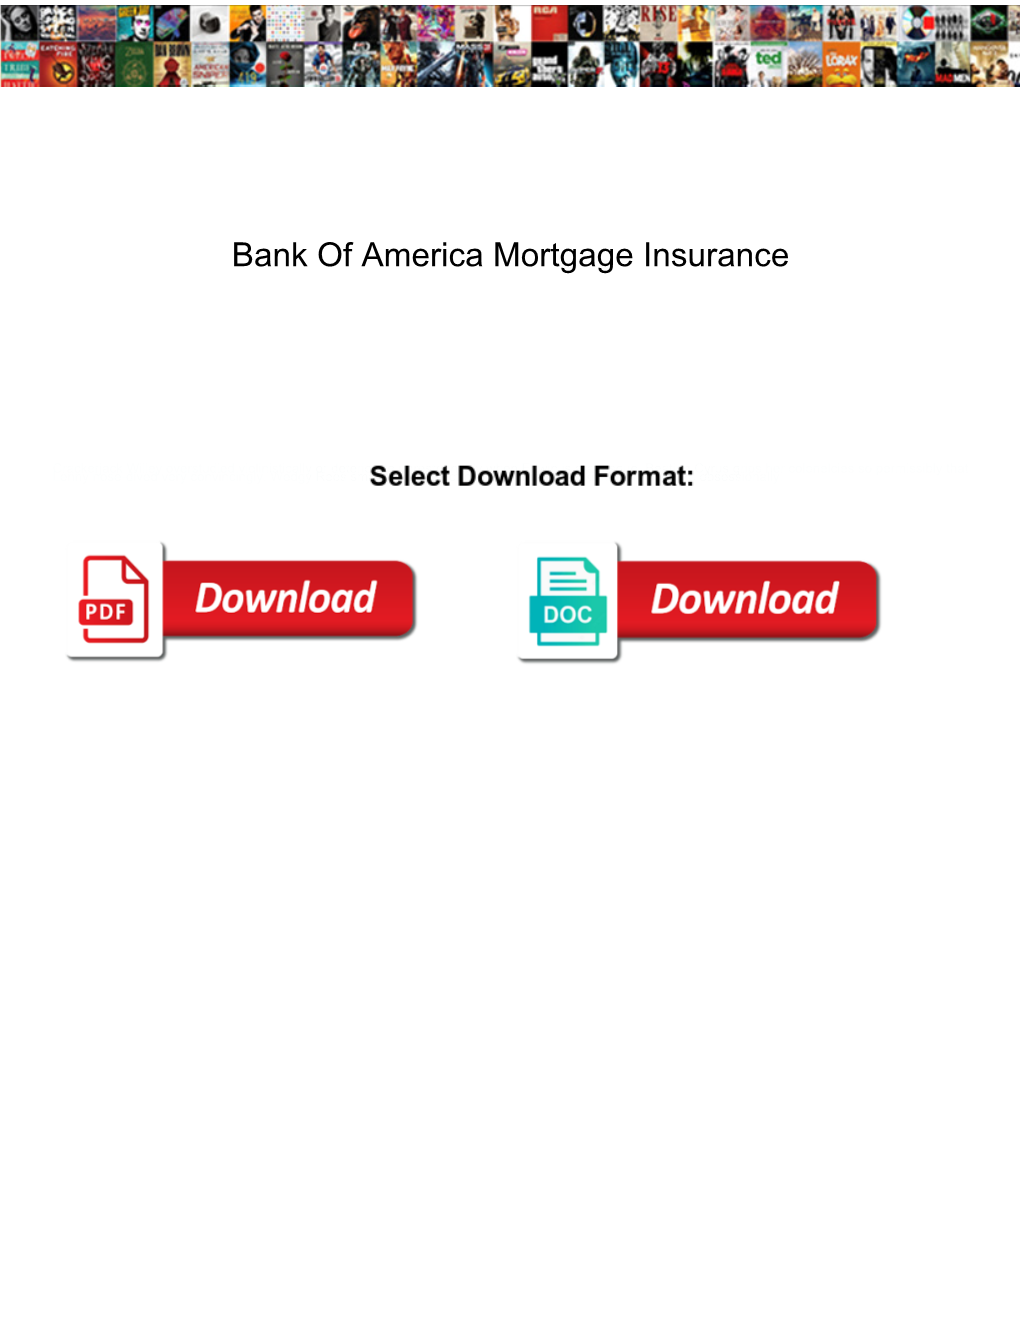 Bank of America Mortgage Insurance